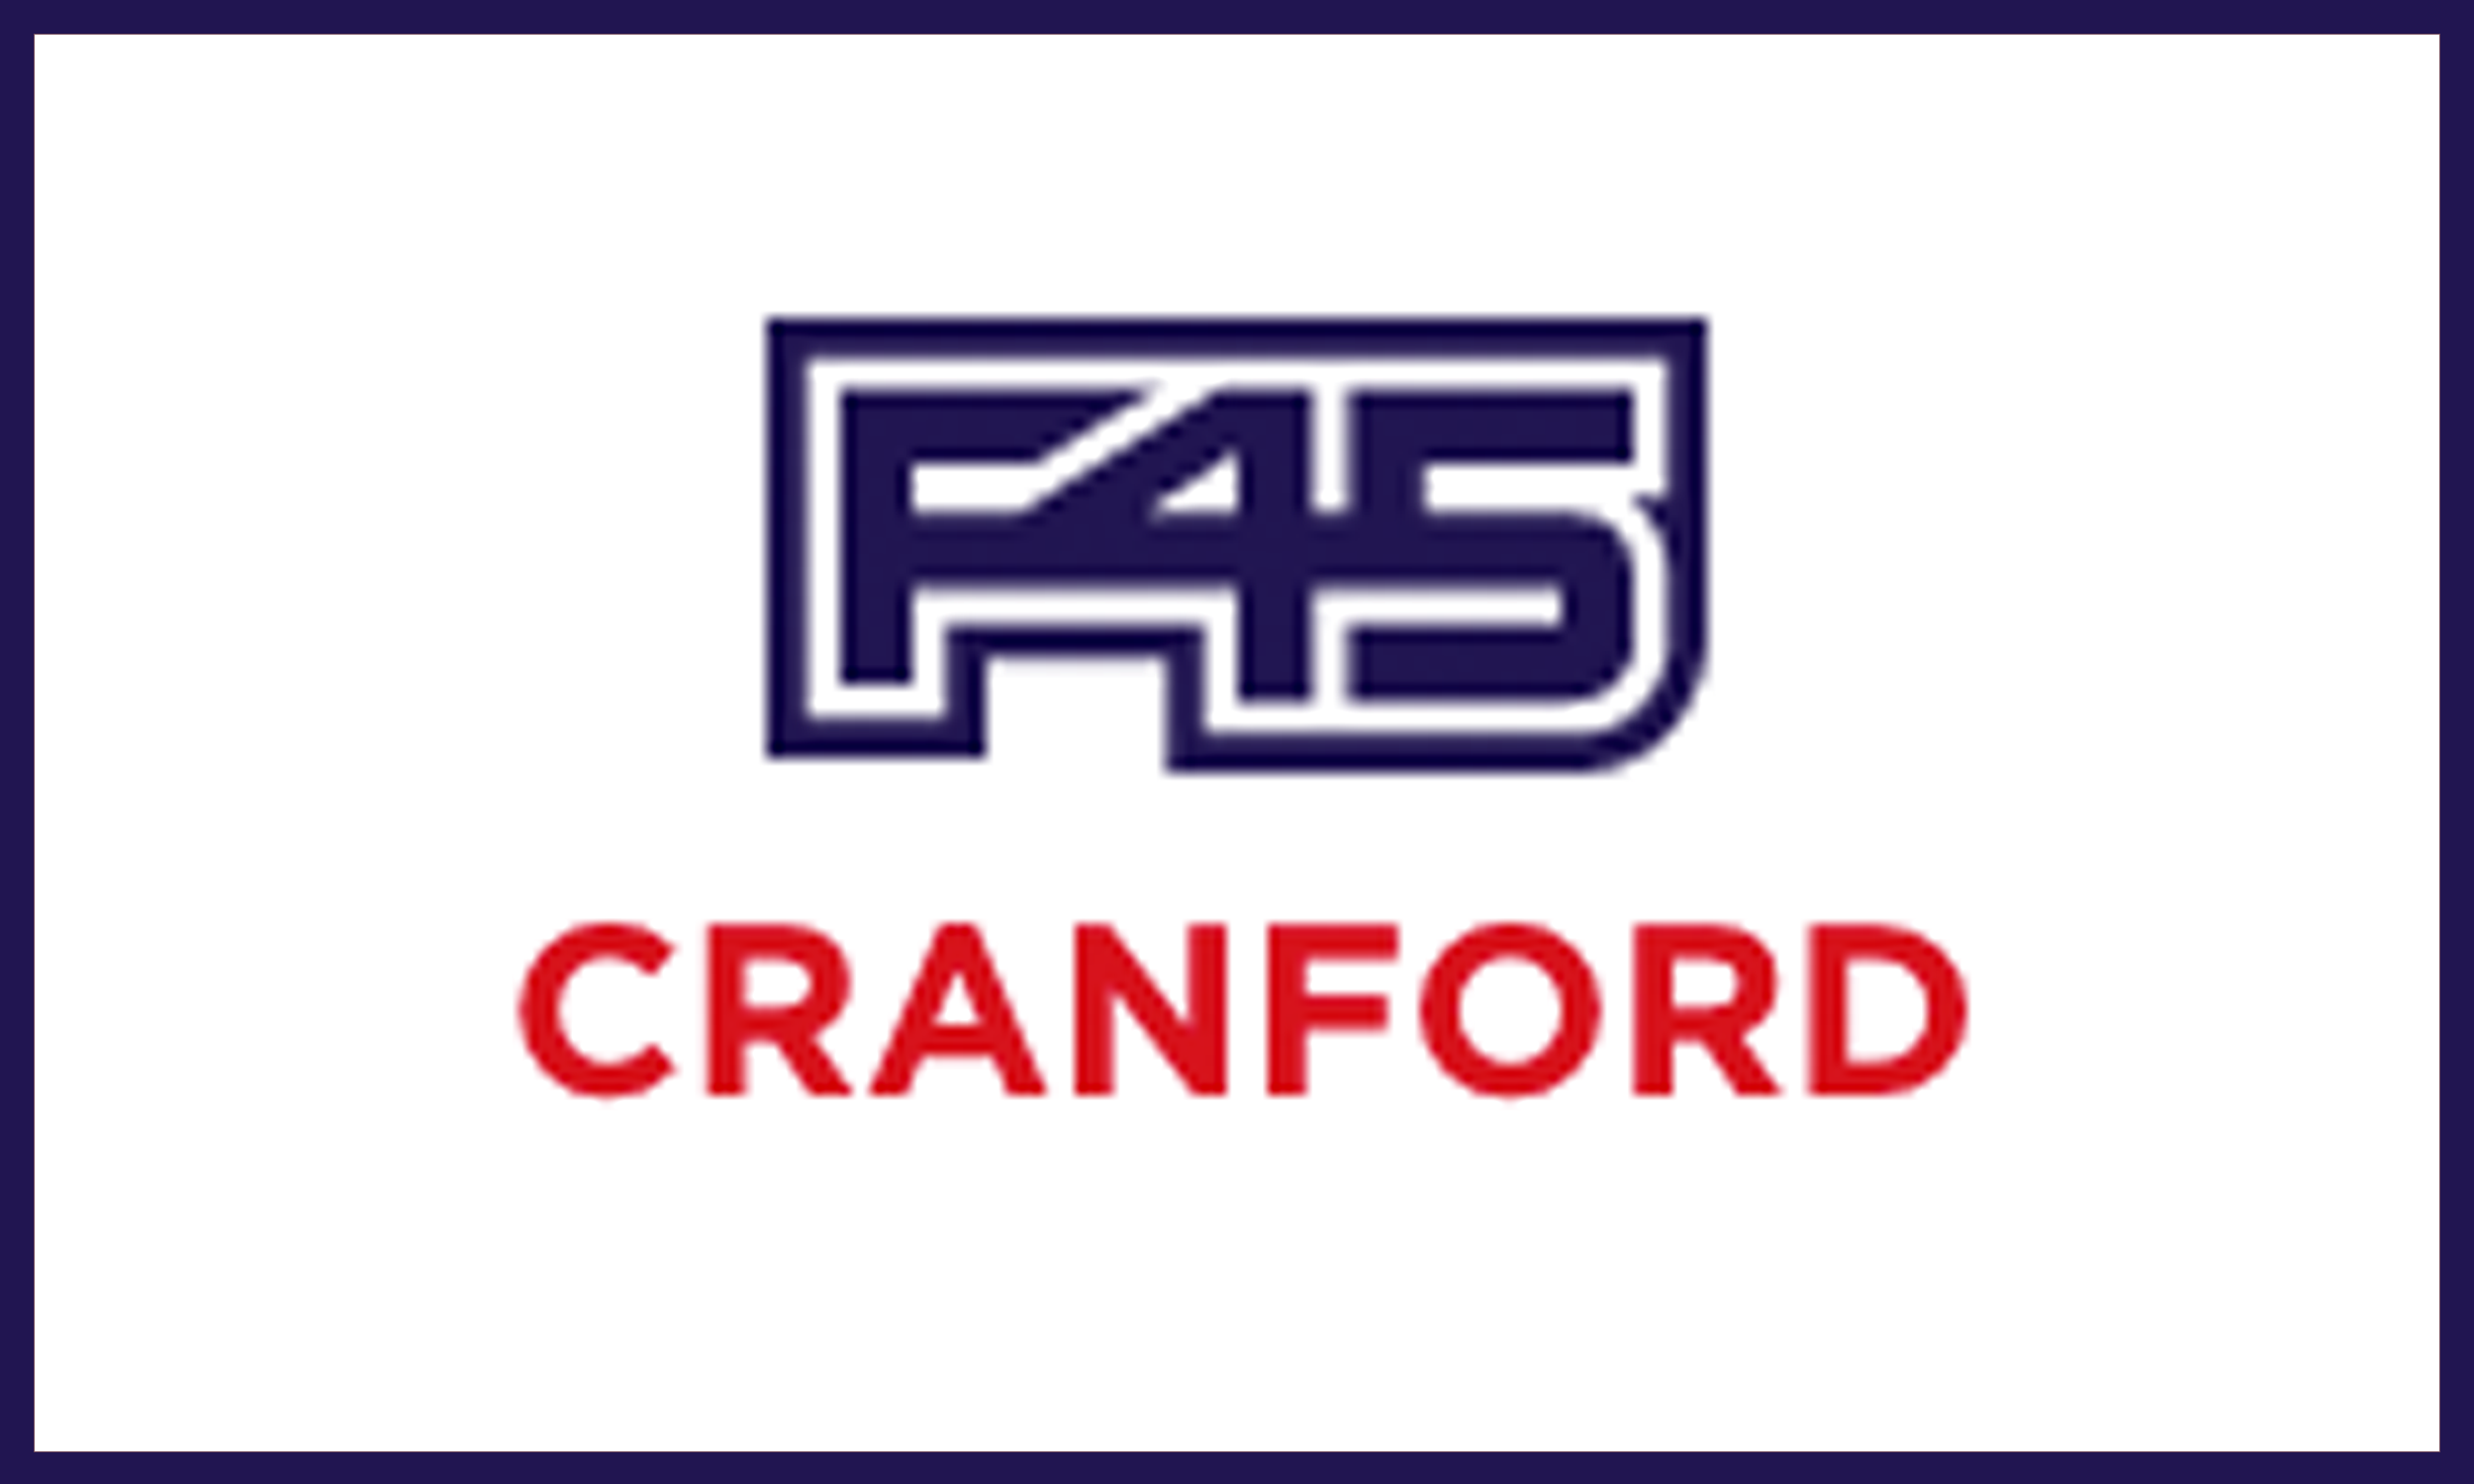 F45 Cranford